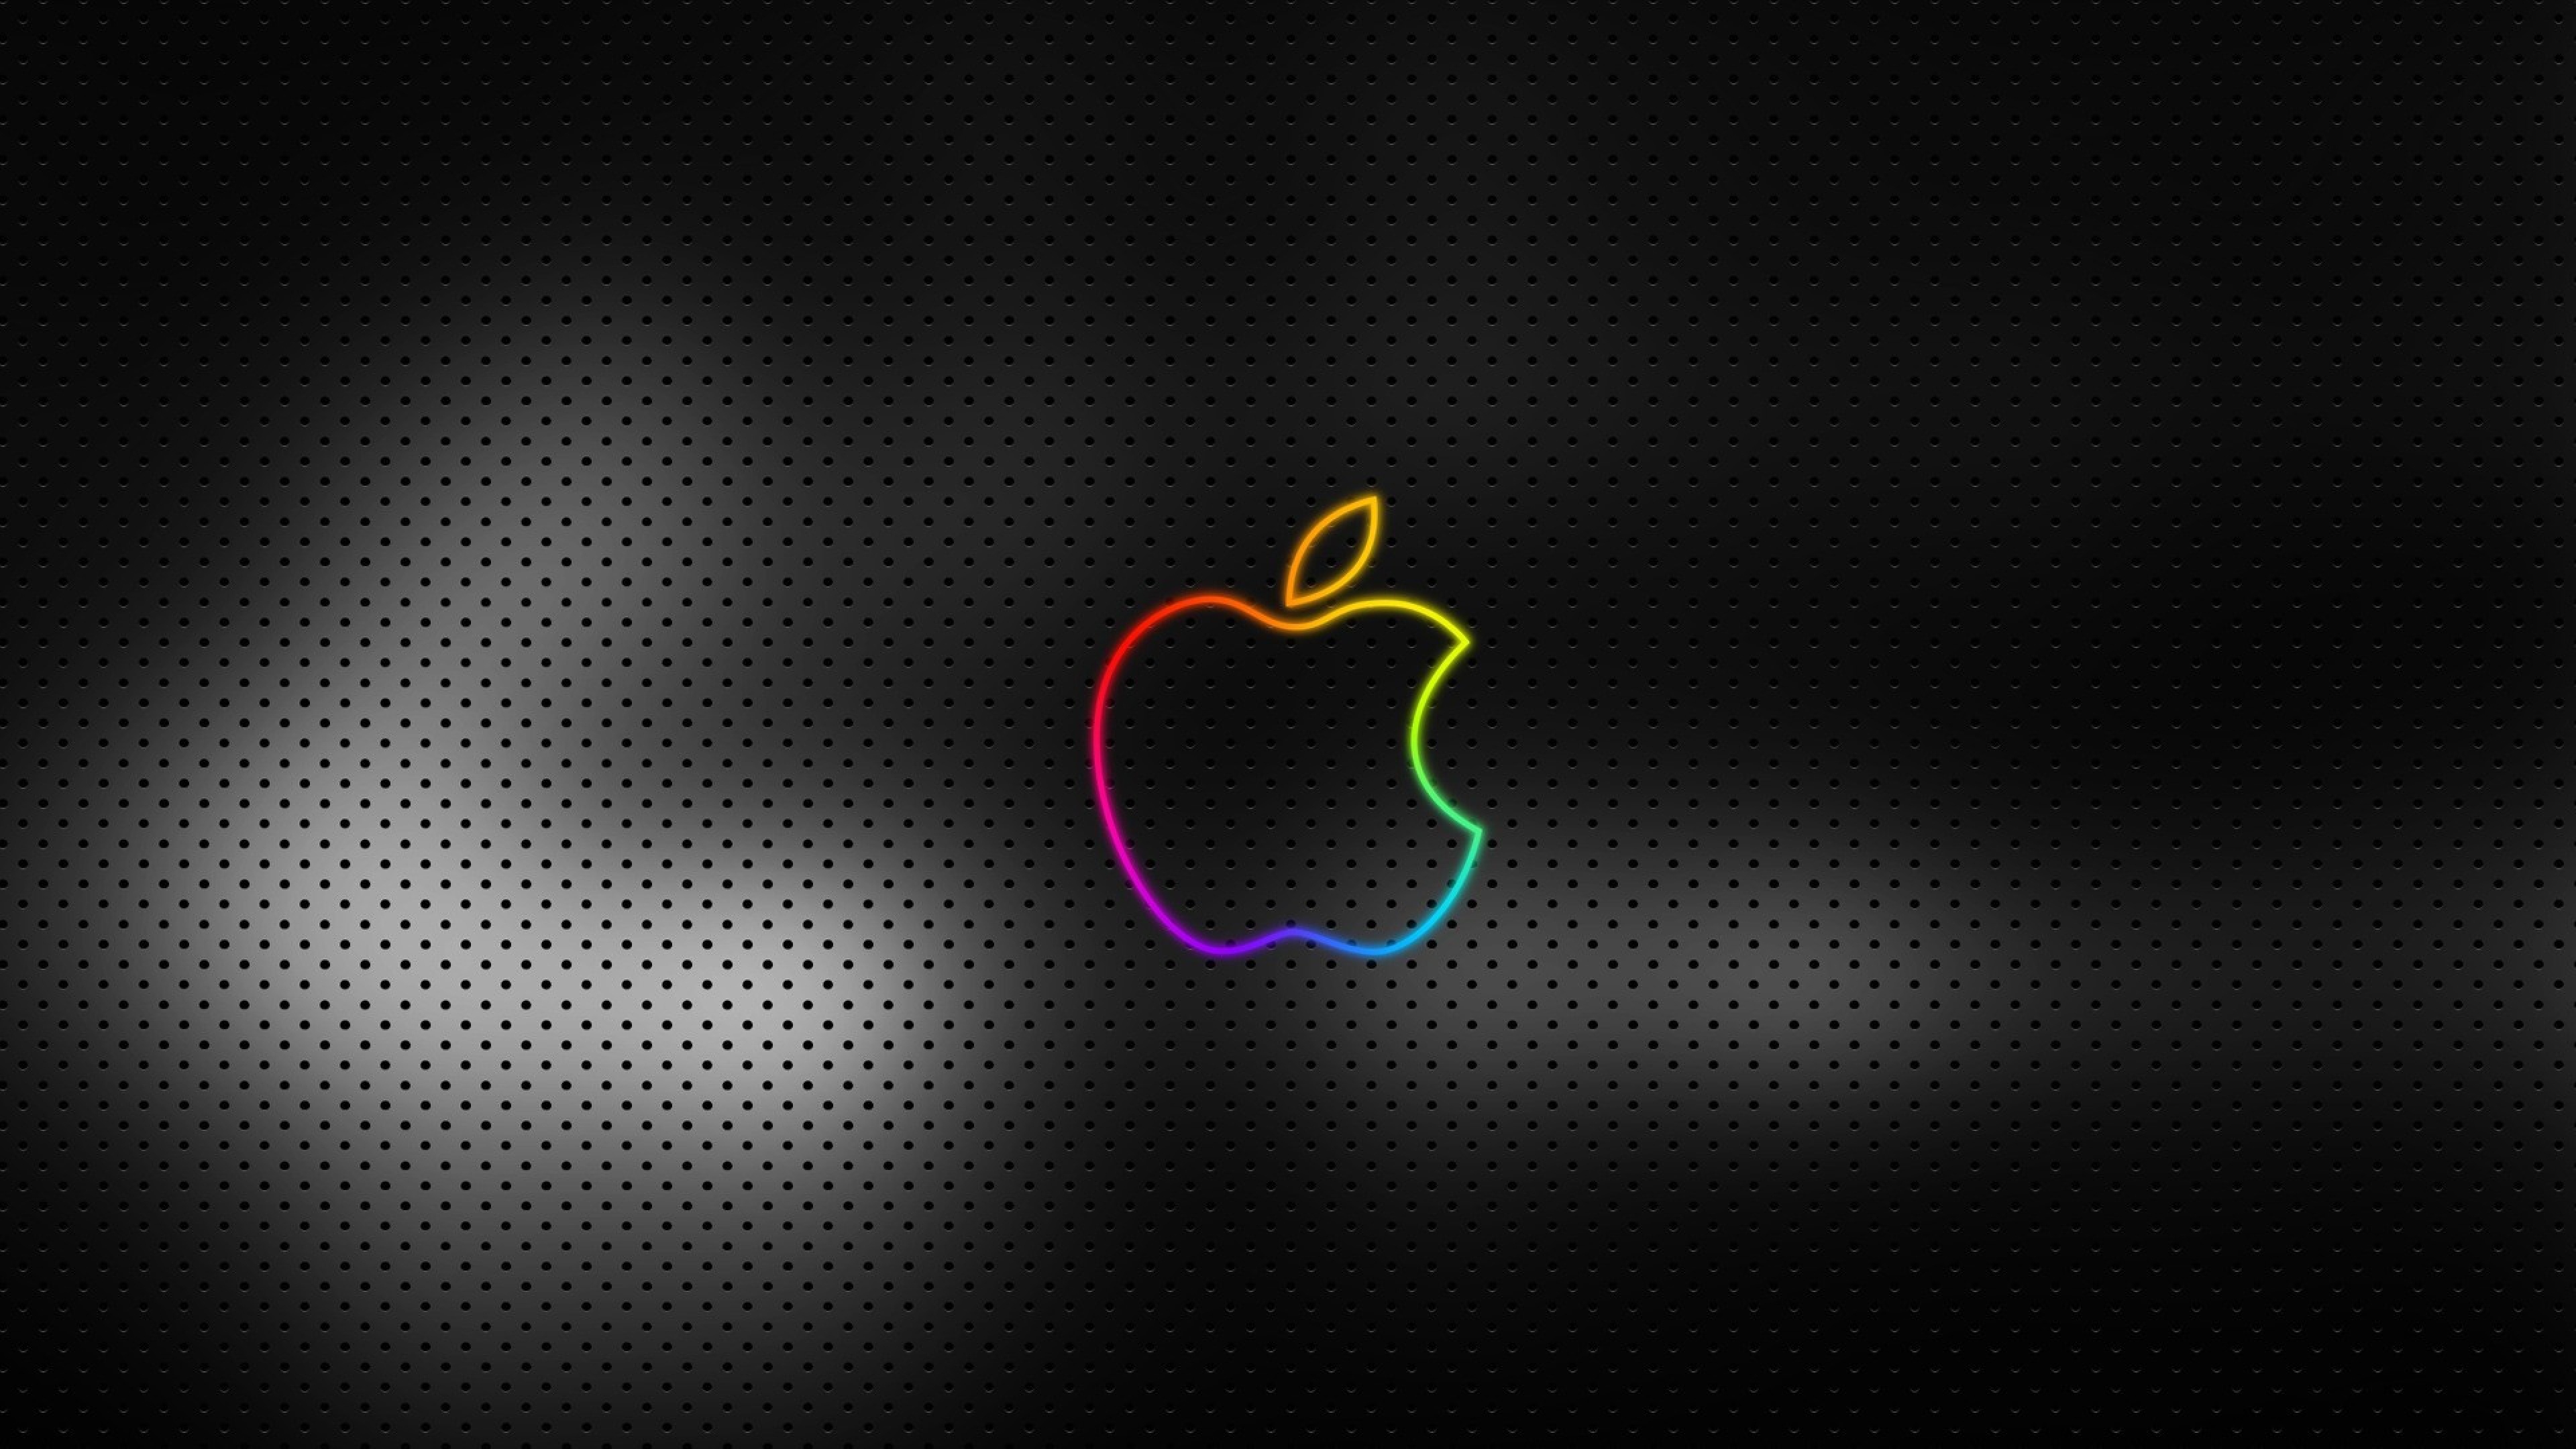 Apple Background